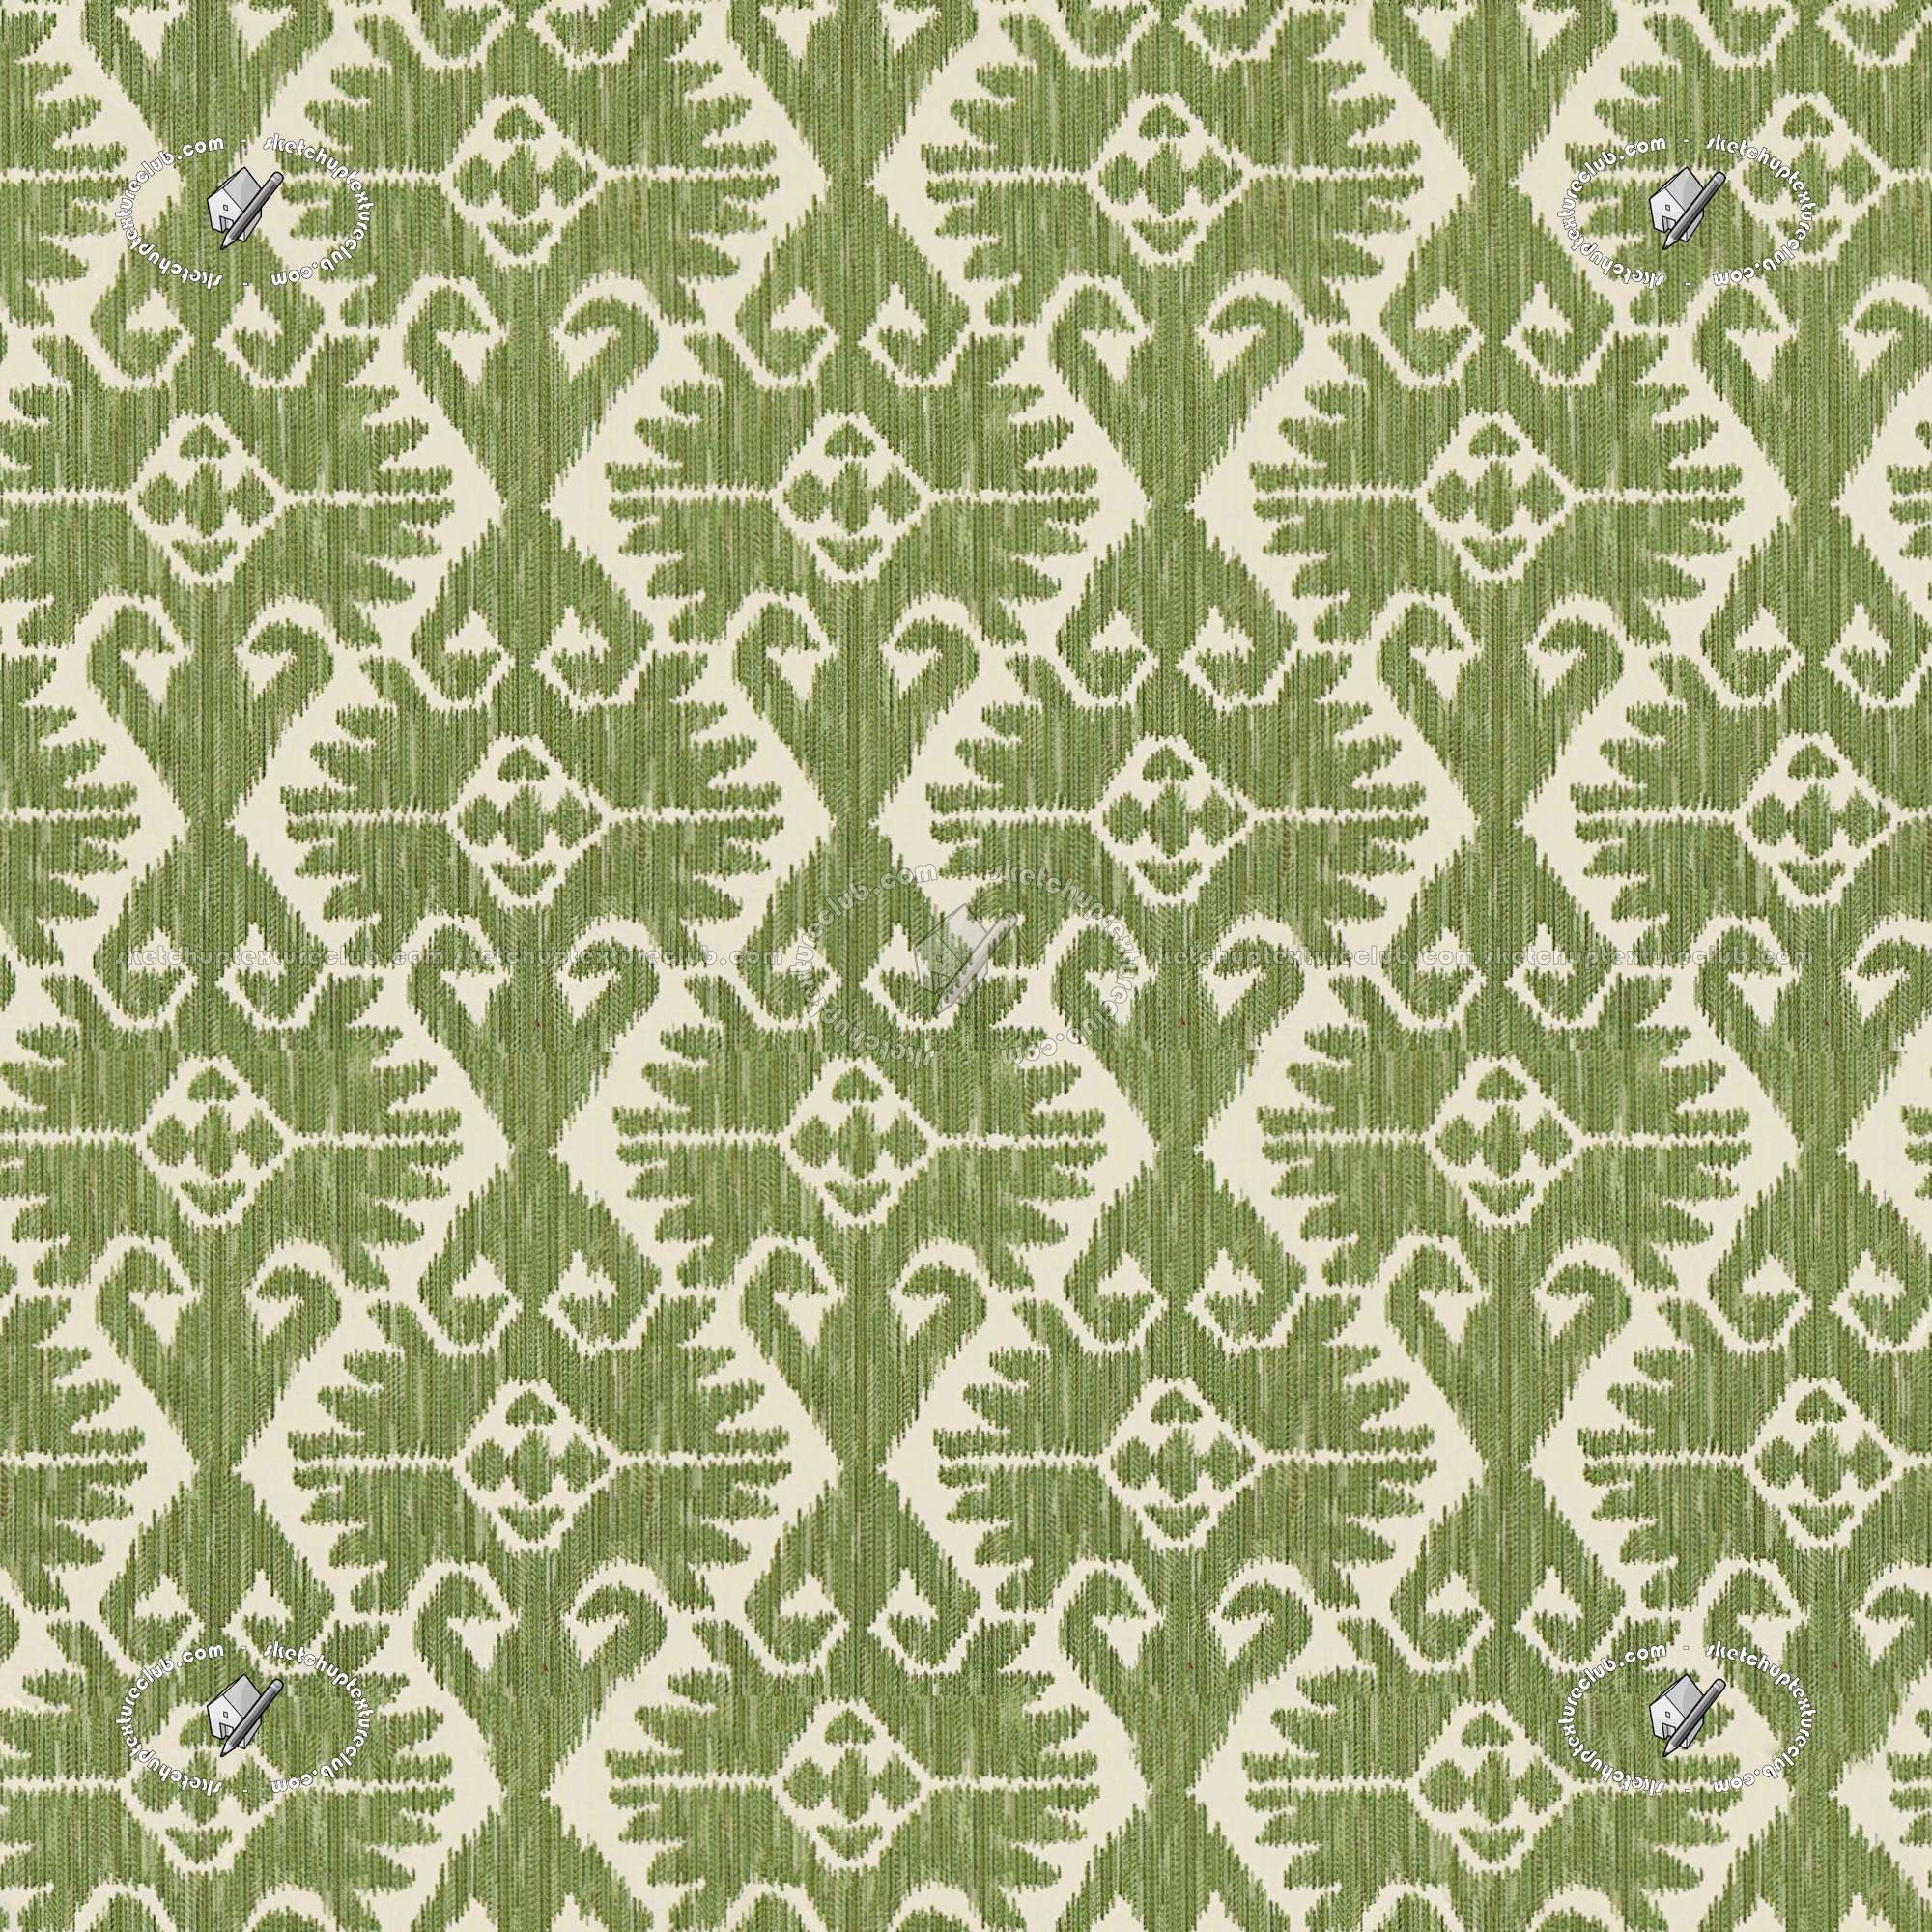  Fabrics  Geometric patterns textures  seamless